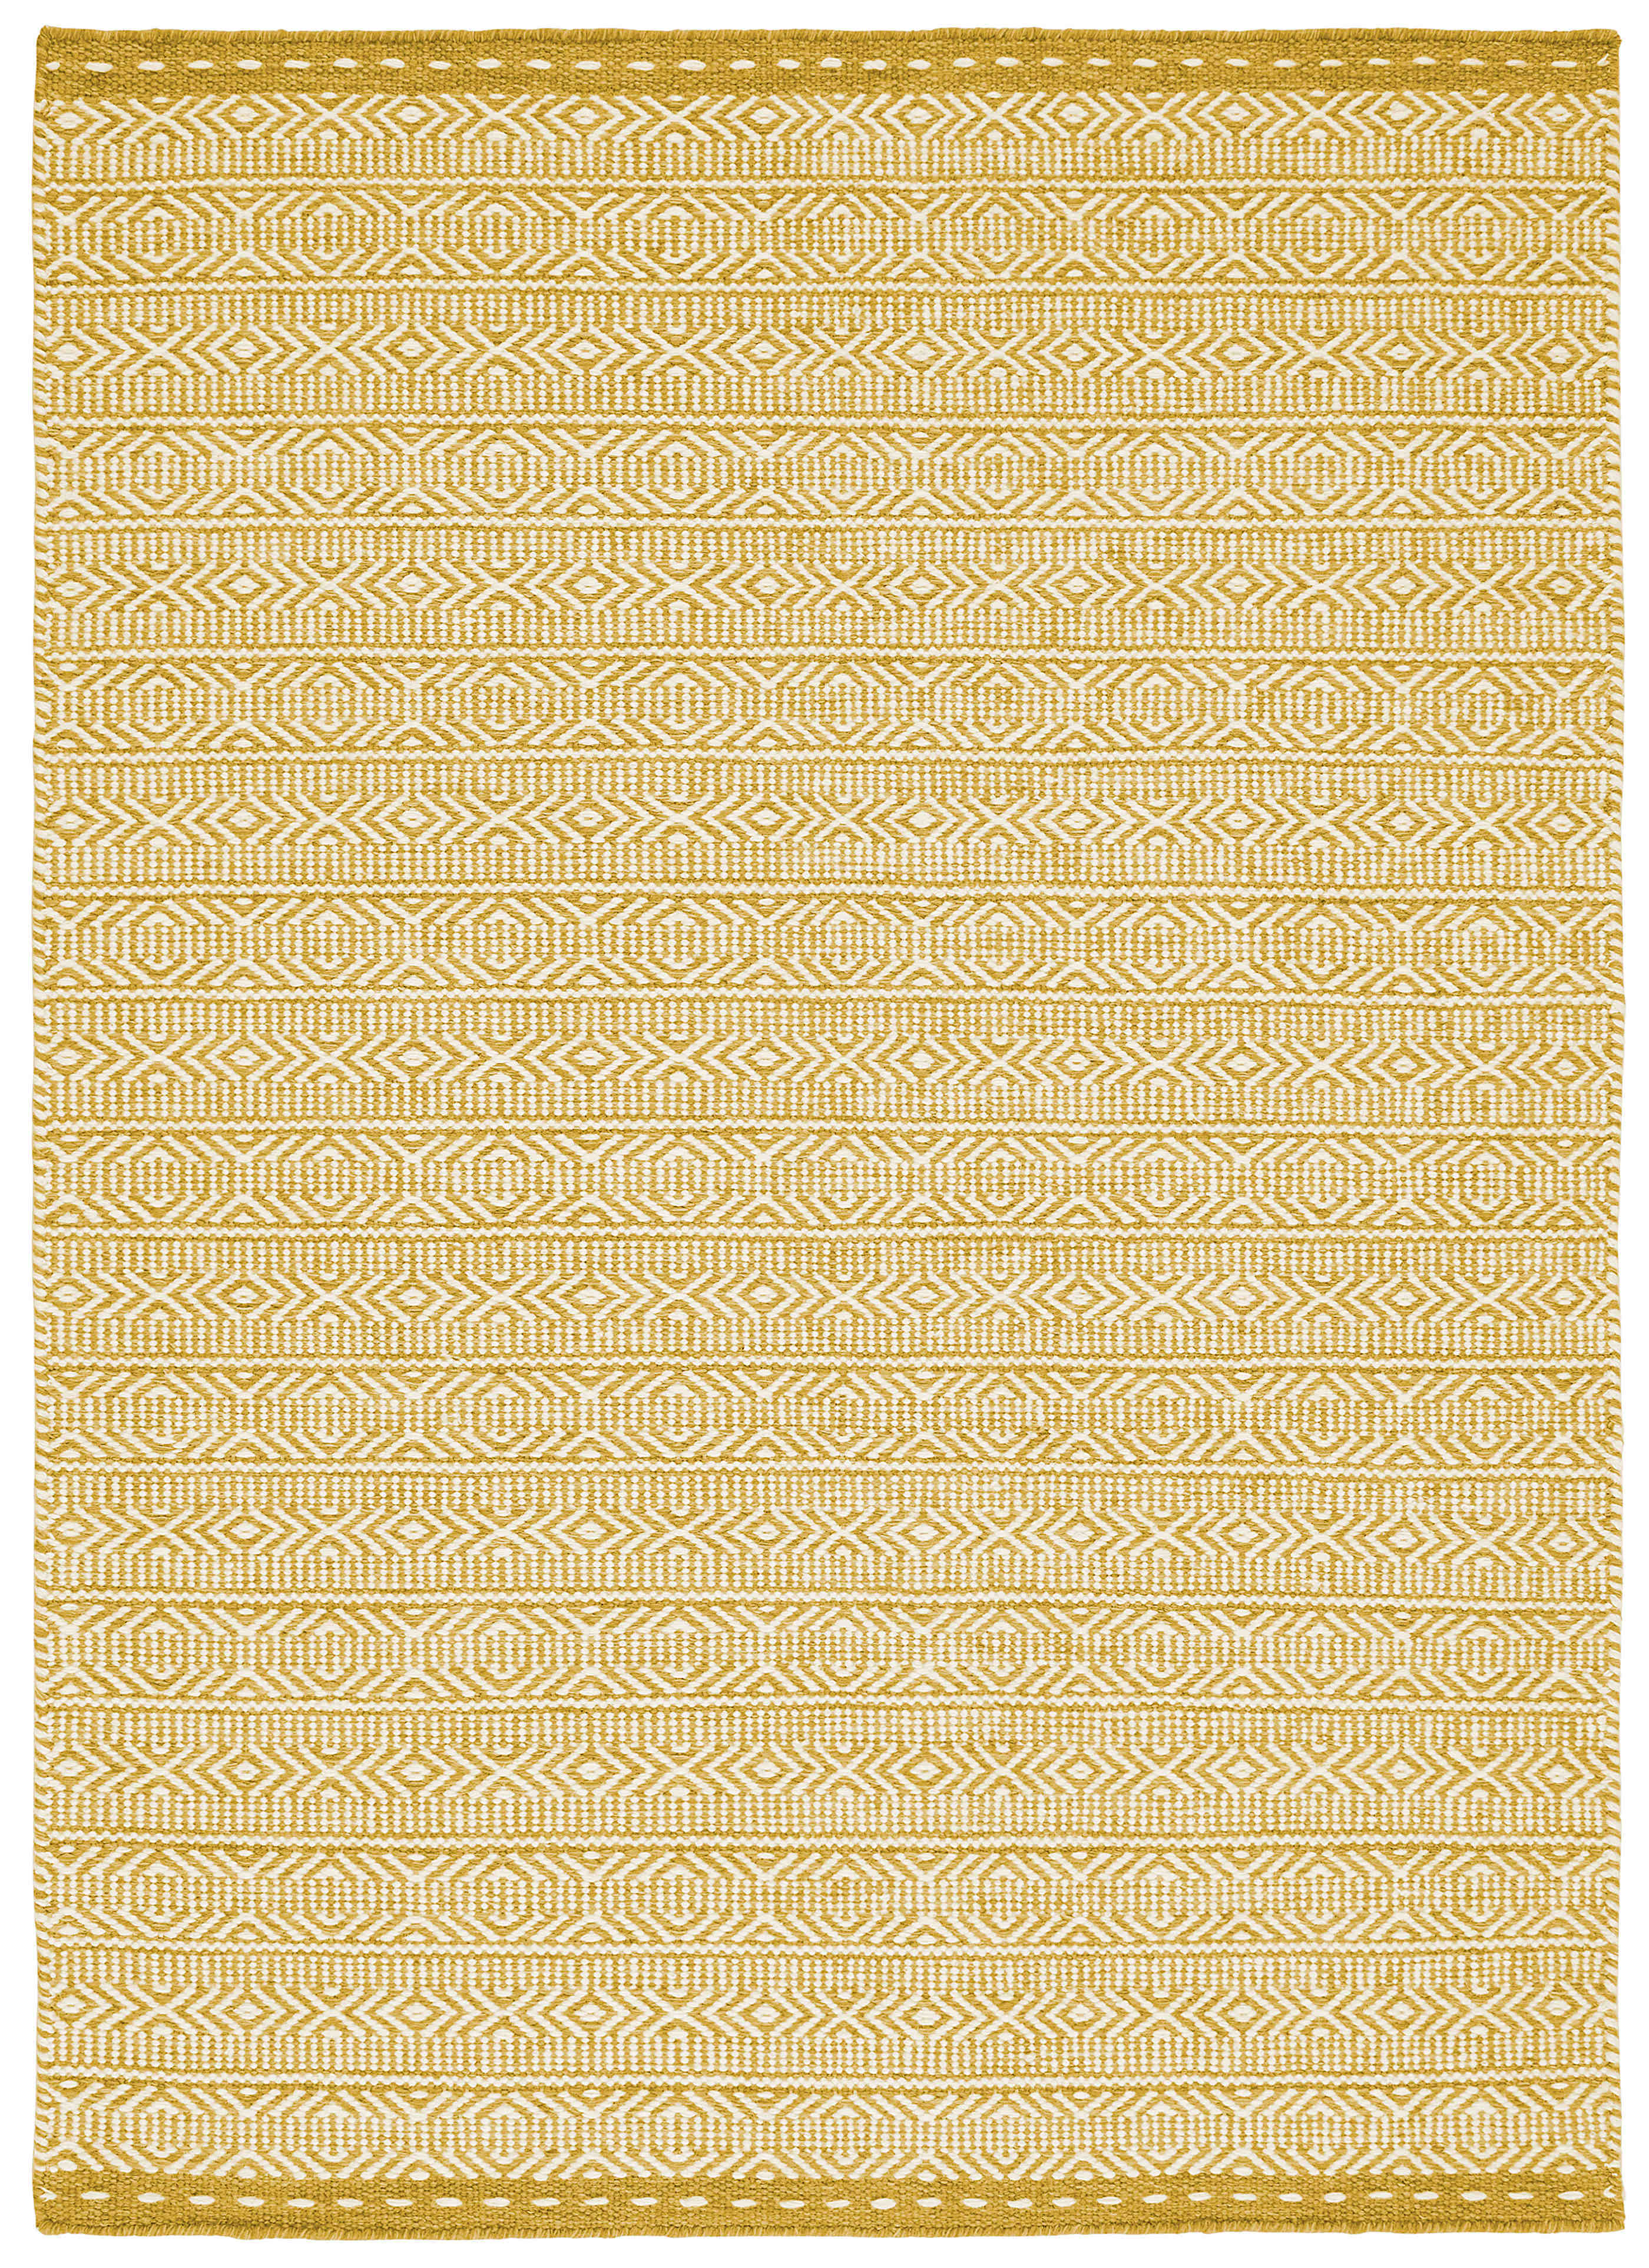 yellow and white kelim flatweave rug